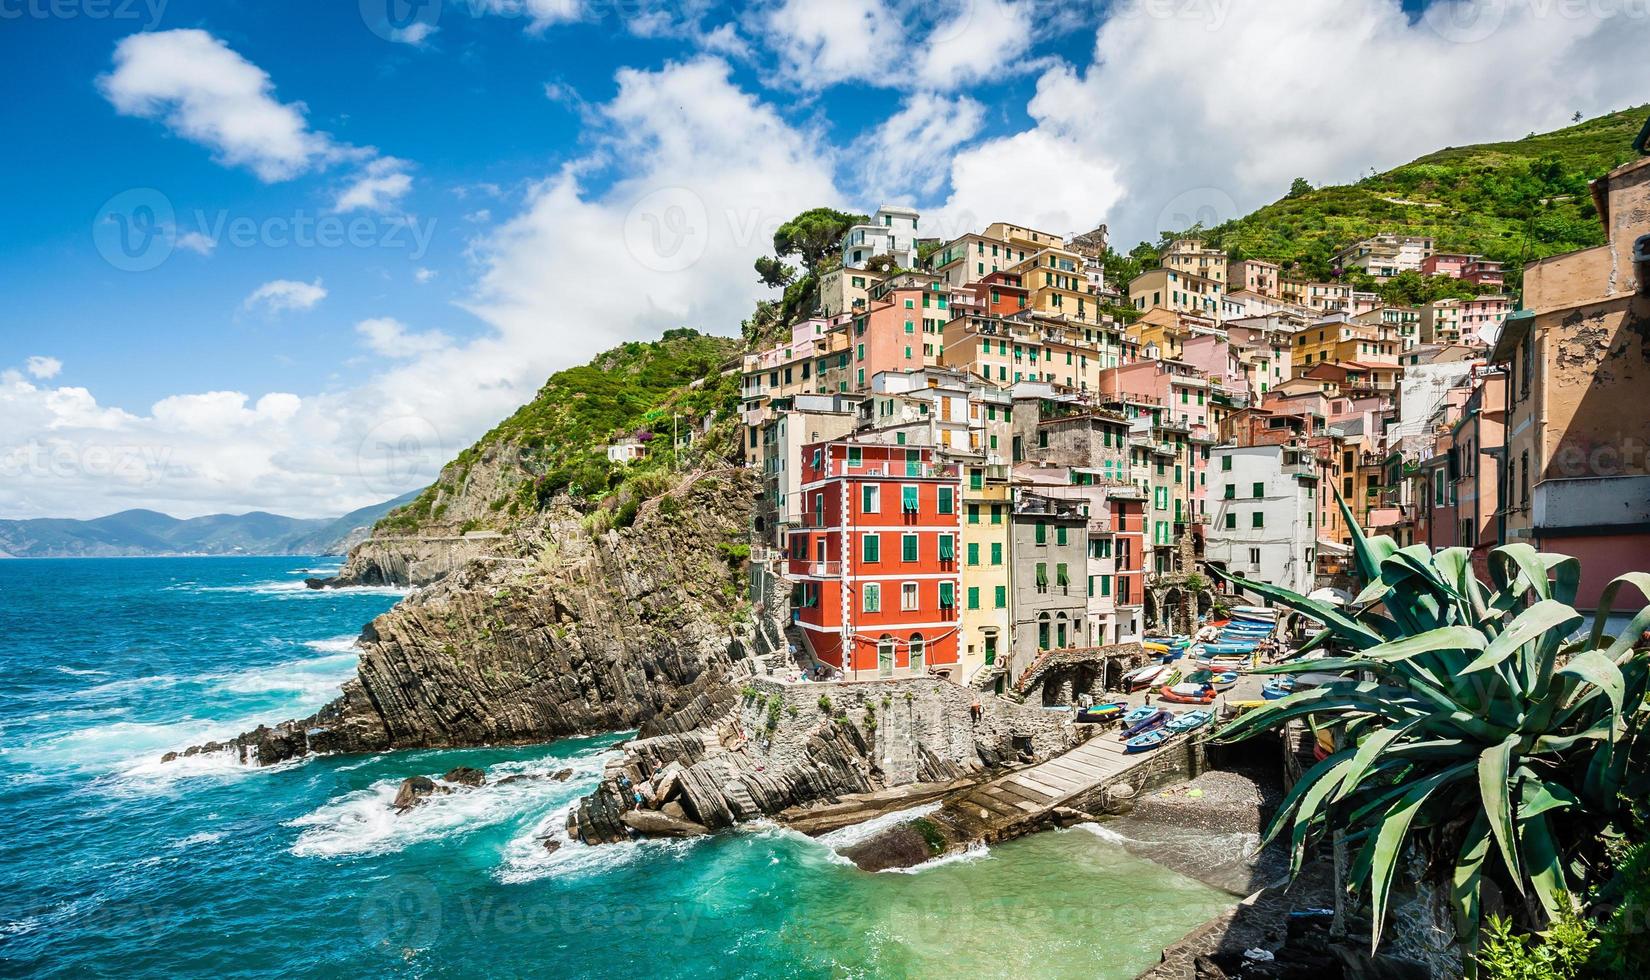 Riomaggiore vissersdorp in Cinque Terre, Ligurië, Italië foto